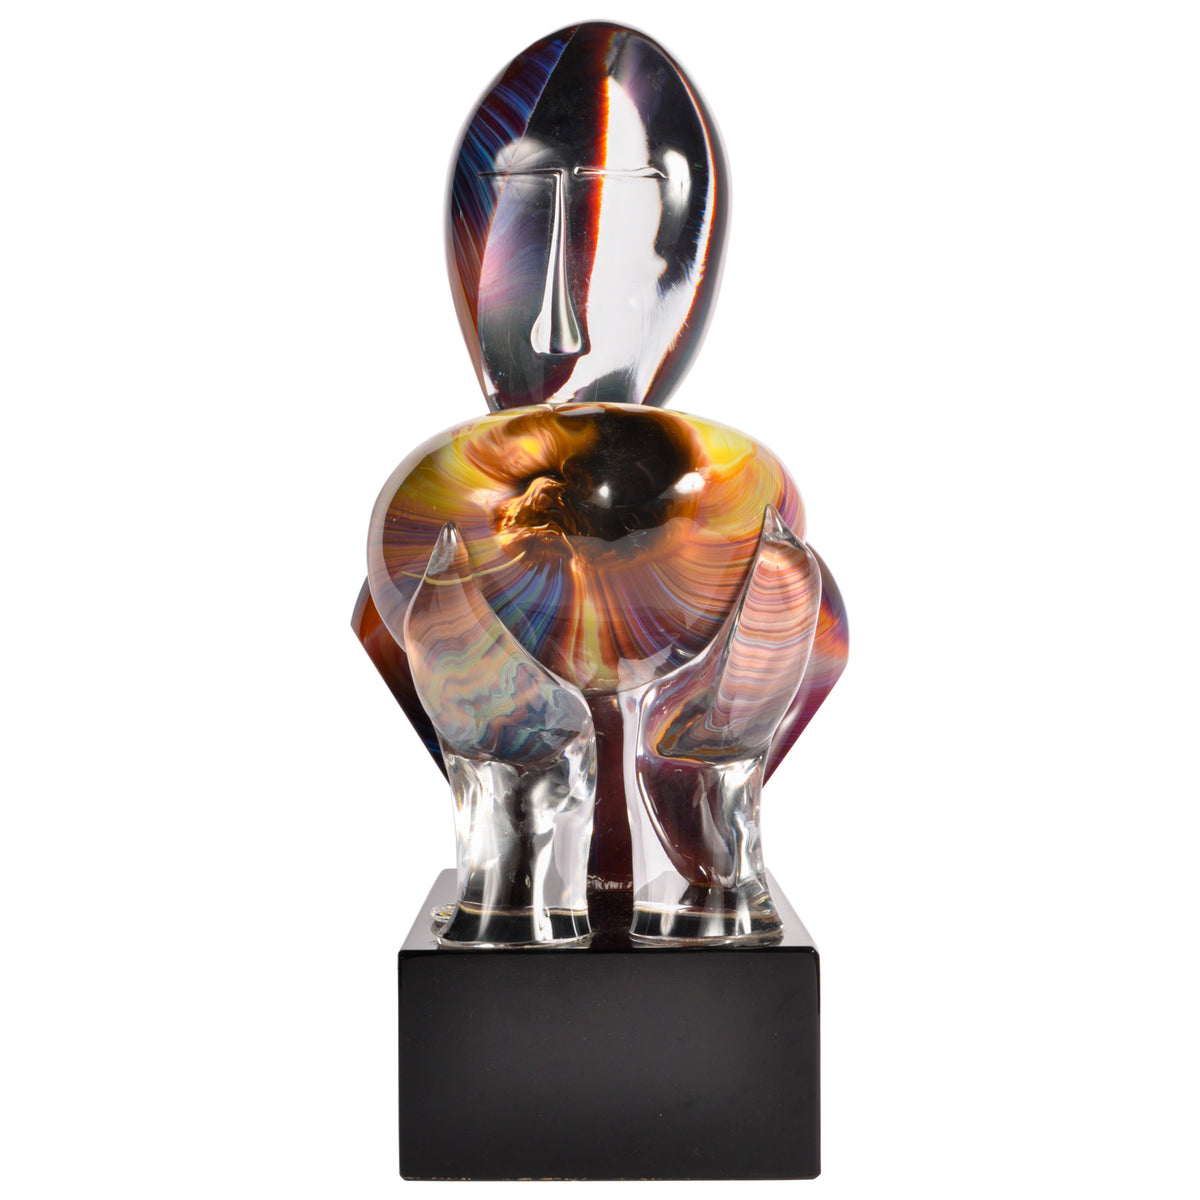 Italian Modernist Handblown Murano Glass Sculpture "The Kiss", Loredano Dino Rosin 1979 Signed